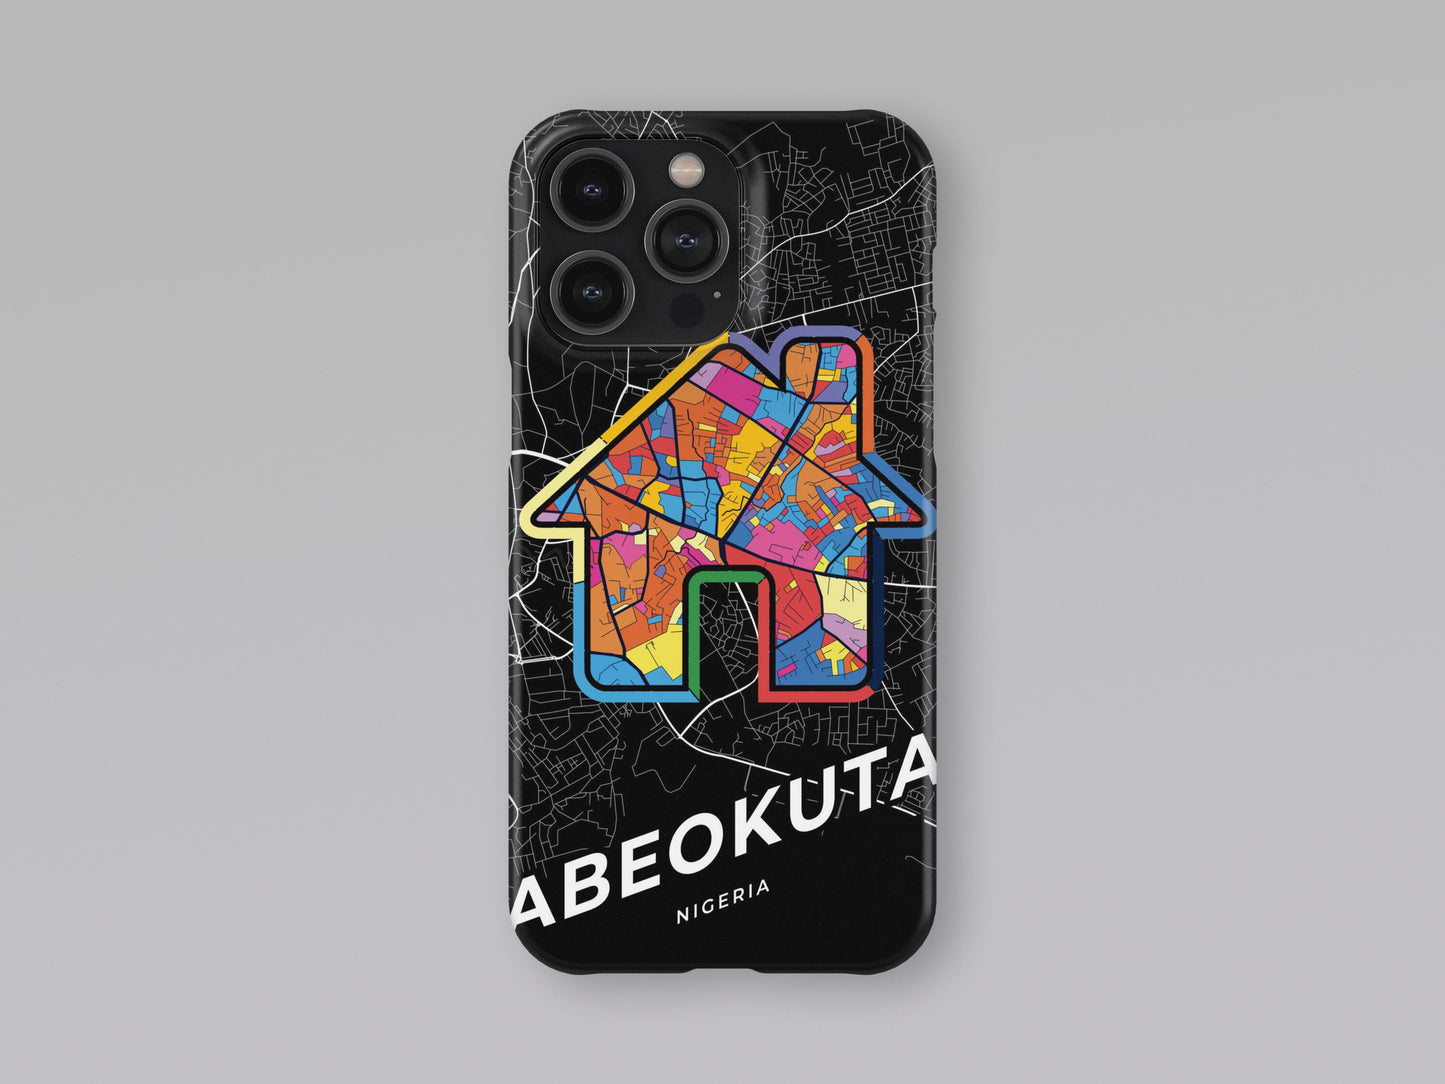 Abeokuta Nigeria slim phone case with colorful icon. Birthday, wedding or housewarming gift. Couple match cases. 3